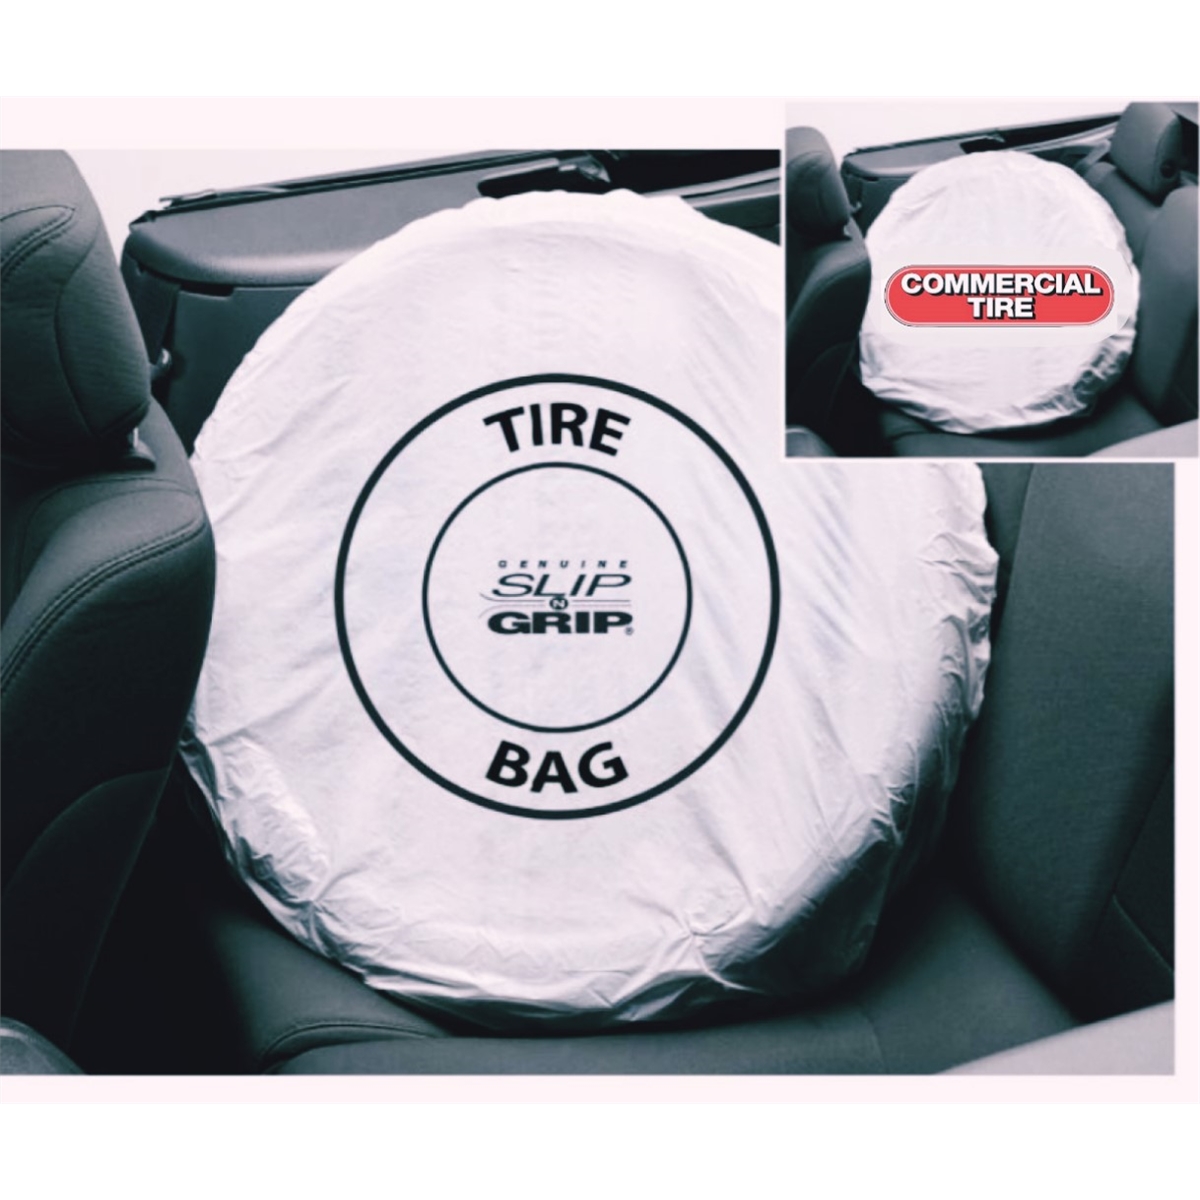 Picture of Petoskey Plastics PET-COMTIREBAG Plastic Tire Cover Bags - 250 Bags per Roll